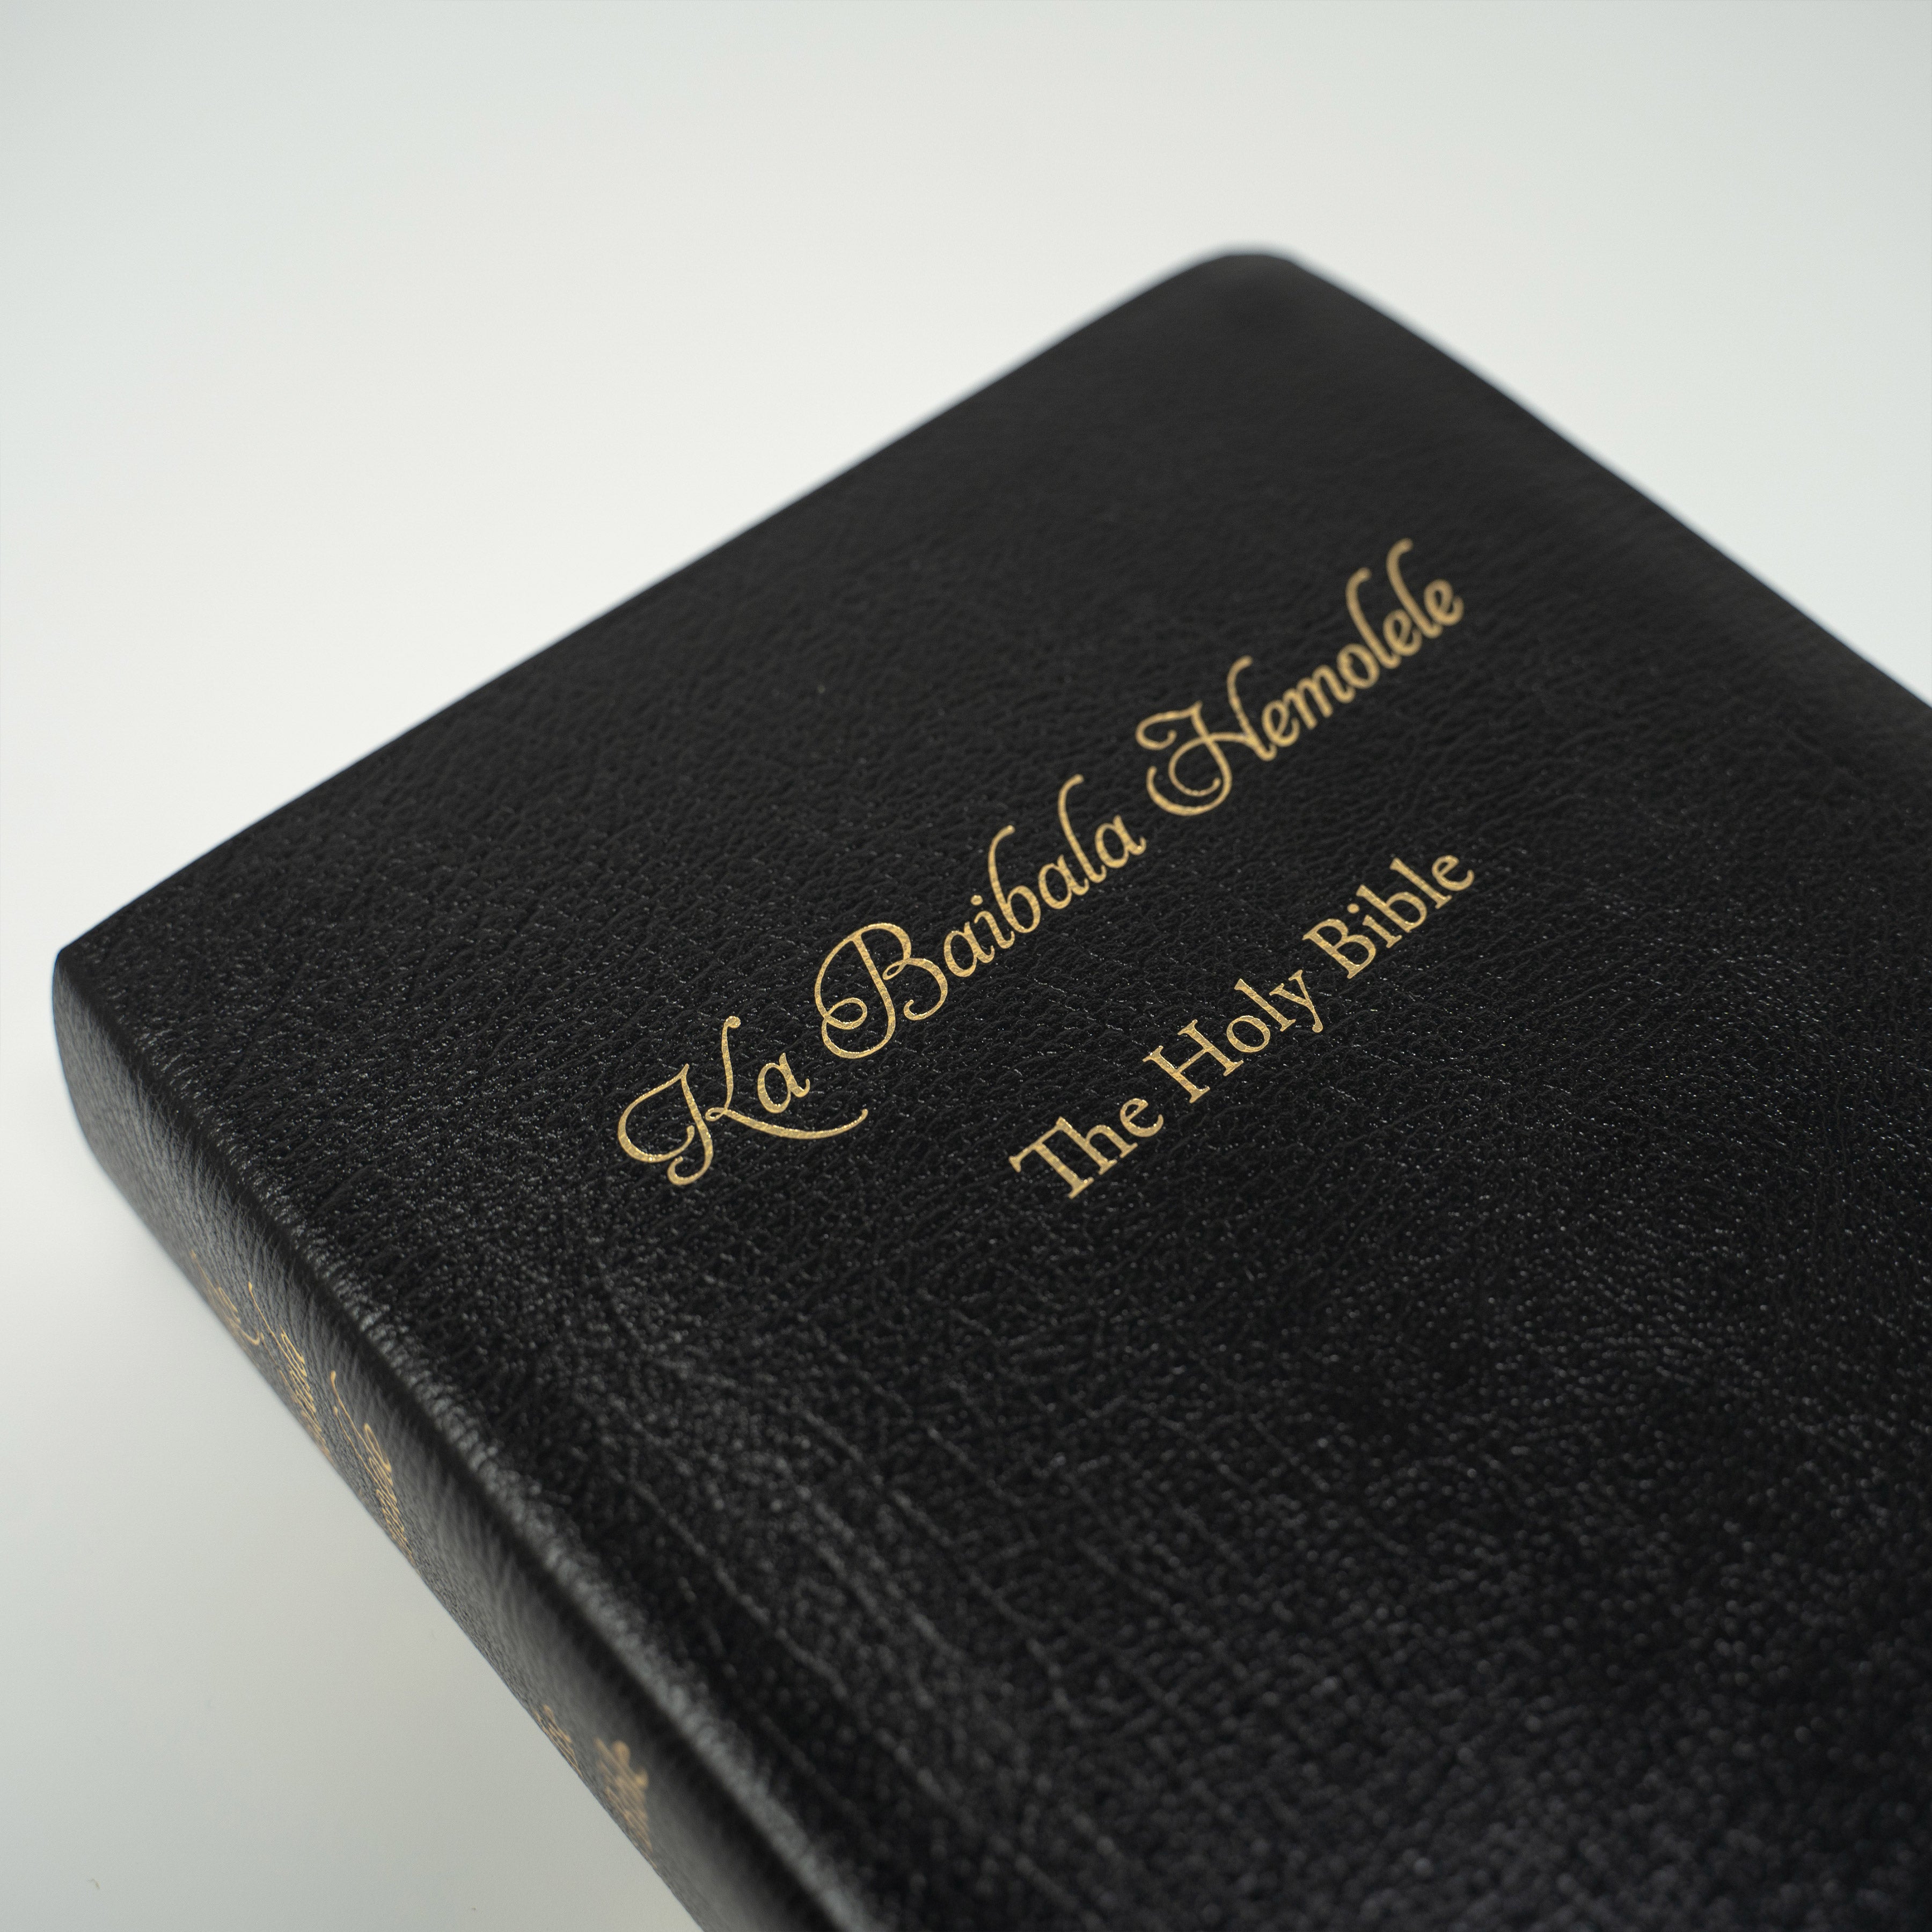 The Holy Bible (Ka Baibala Hemolele)